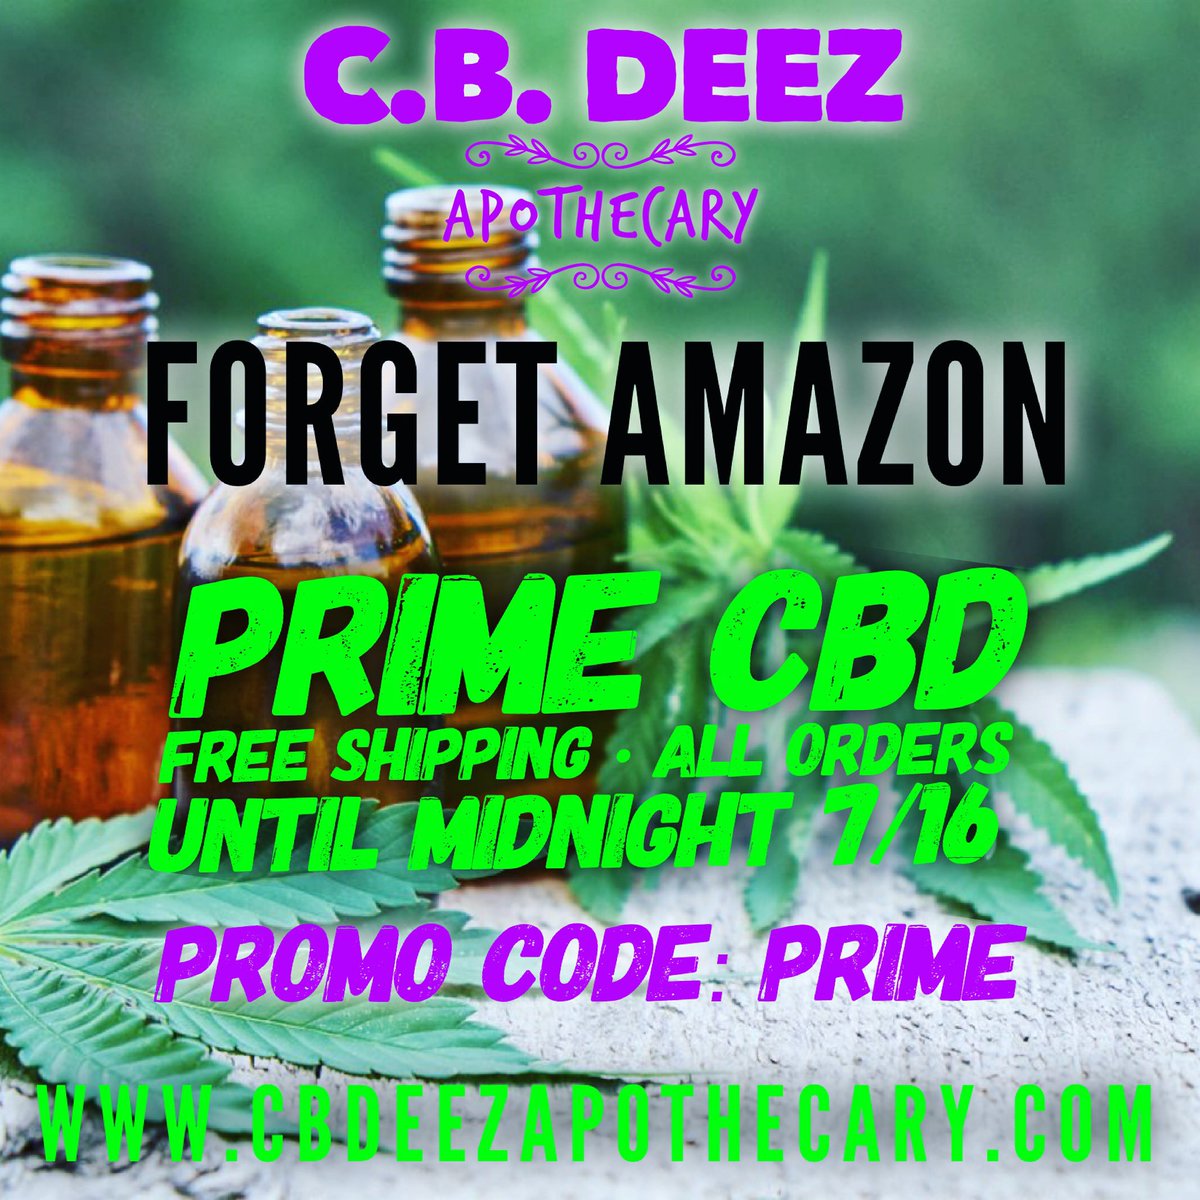 Get #PrimedUp with #FreeShipping!
•
#cbd #cbdeeznutz #cbdoil #cbdheals #cbdhelps #cbdlife #cbdshop #cbdcommunity #cbdisolate #cbdedibles #cbdproducts #local #texascbd #houstoncbd #cbdoils #buycbd #prime #primeday #deal #sale #special #amazon #amazonprime #primetime #save